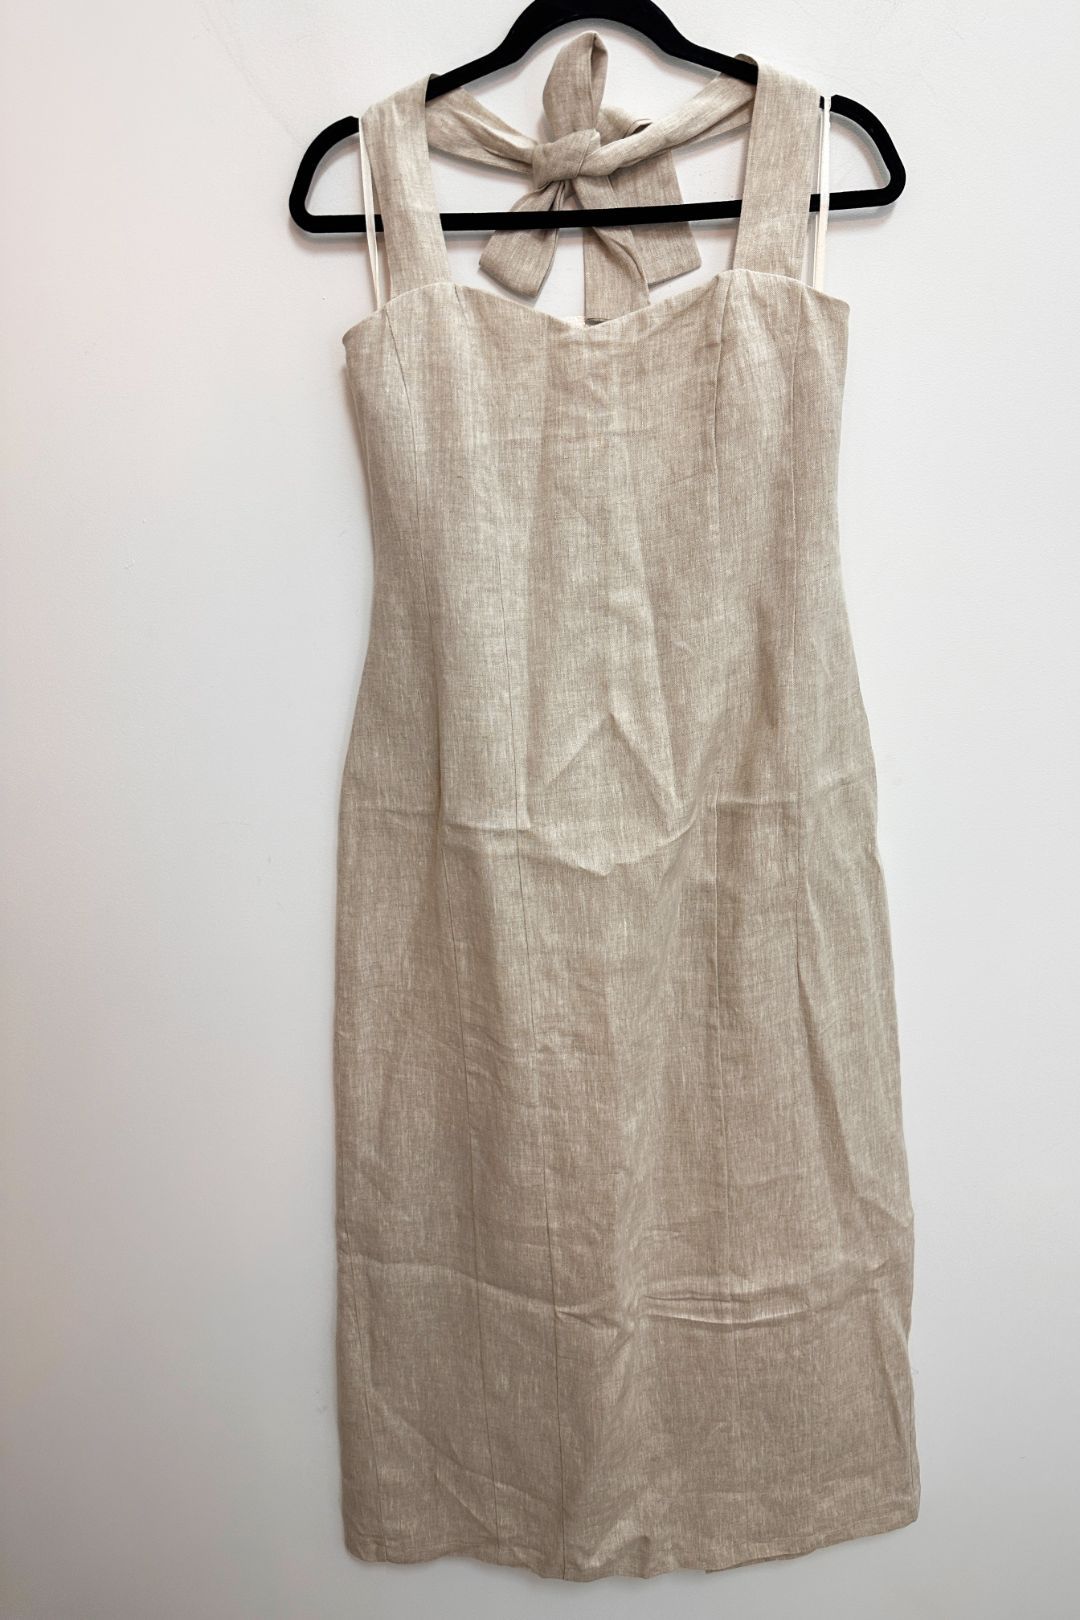 Dishh - Willow Sleeveless Linen Dress in Natural